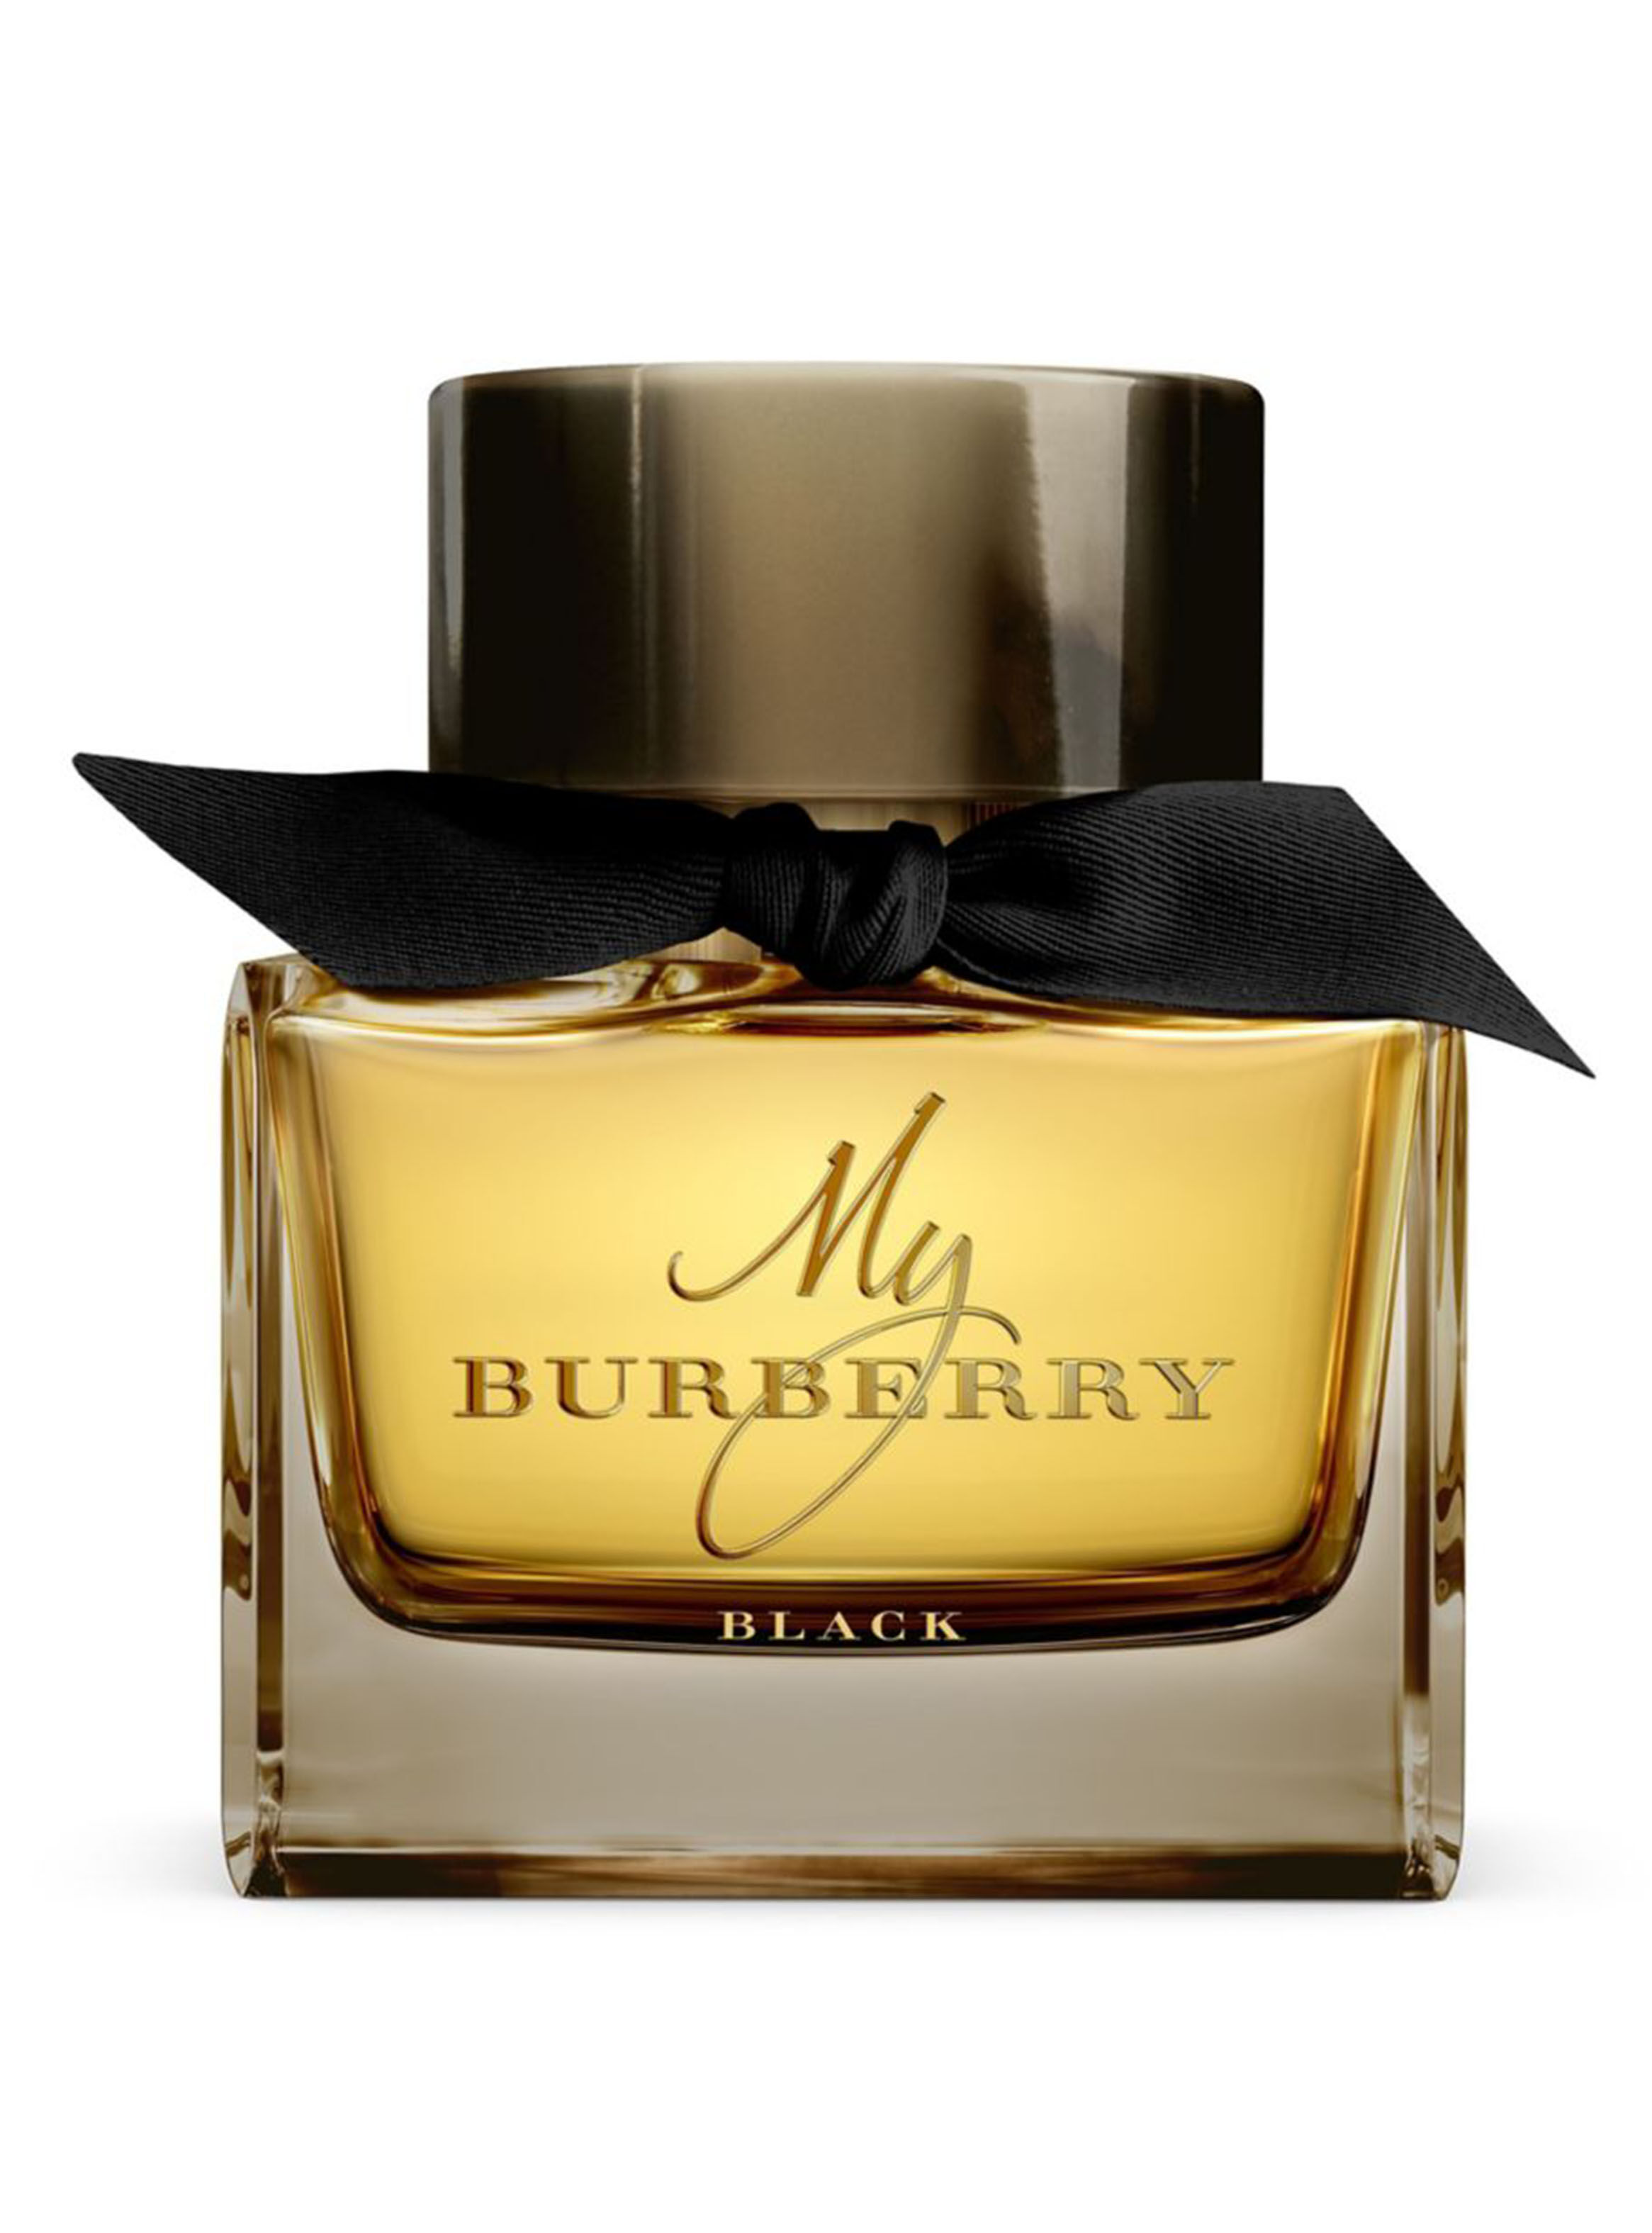 Burberry Perfume Paris Top Sellers, 55% OFF 